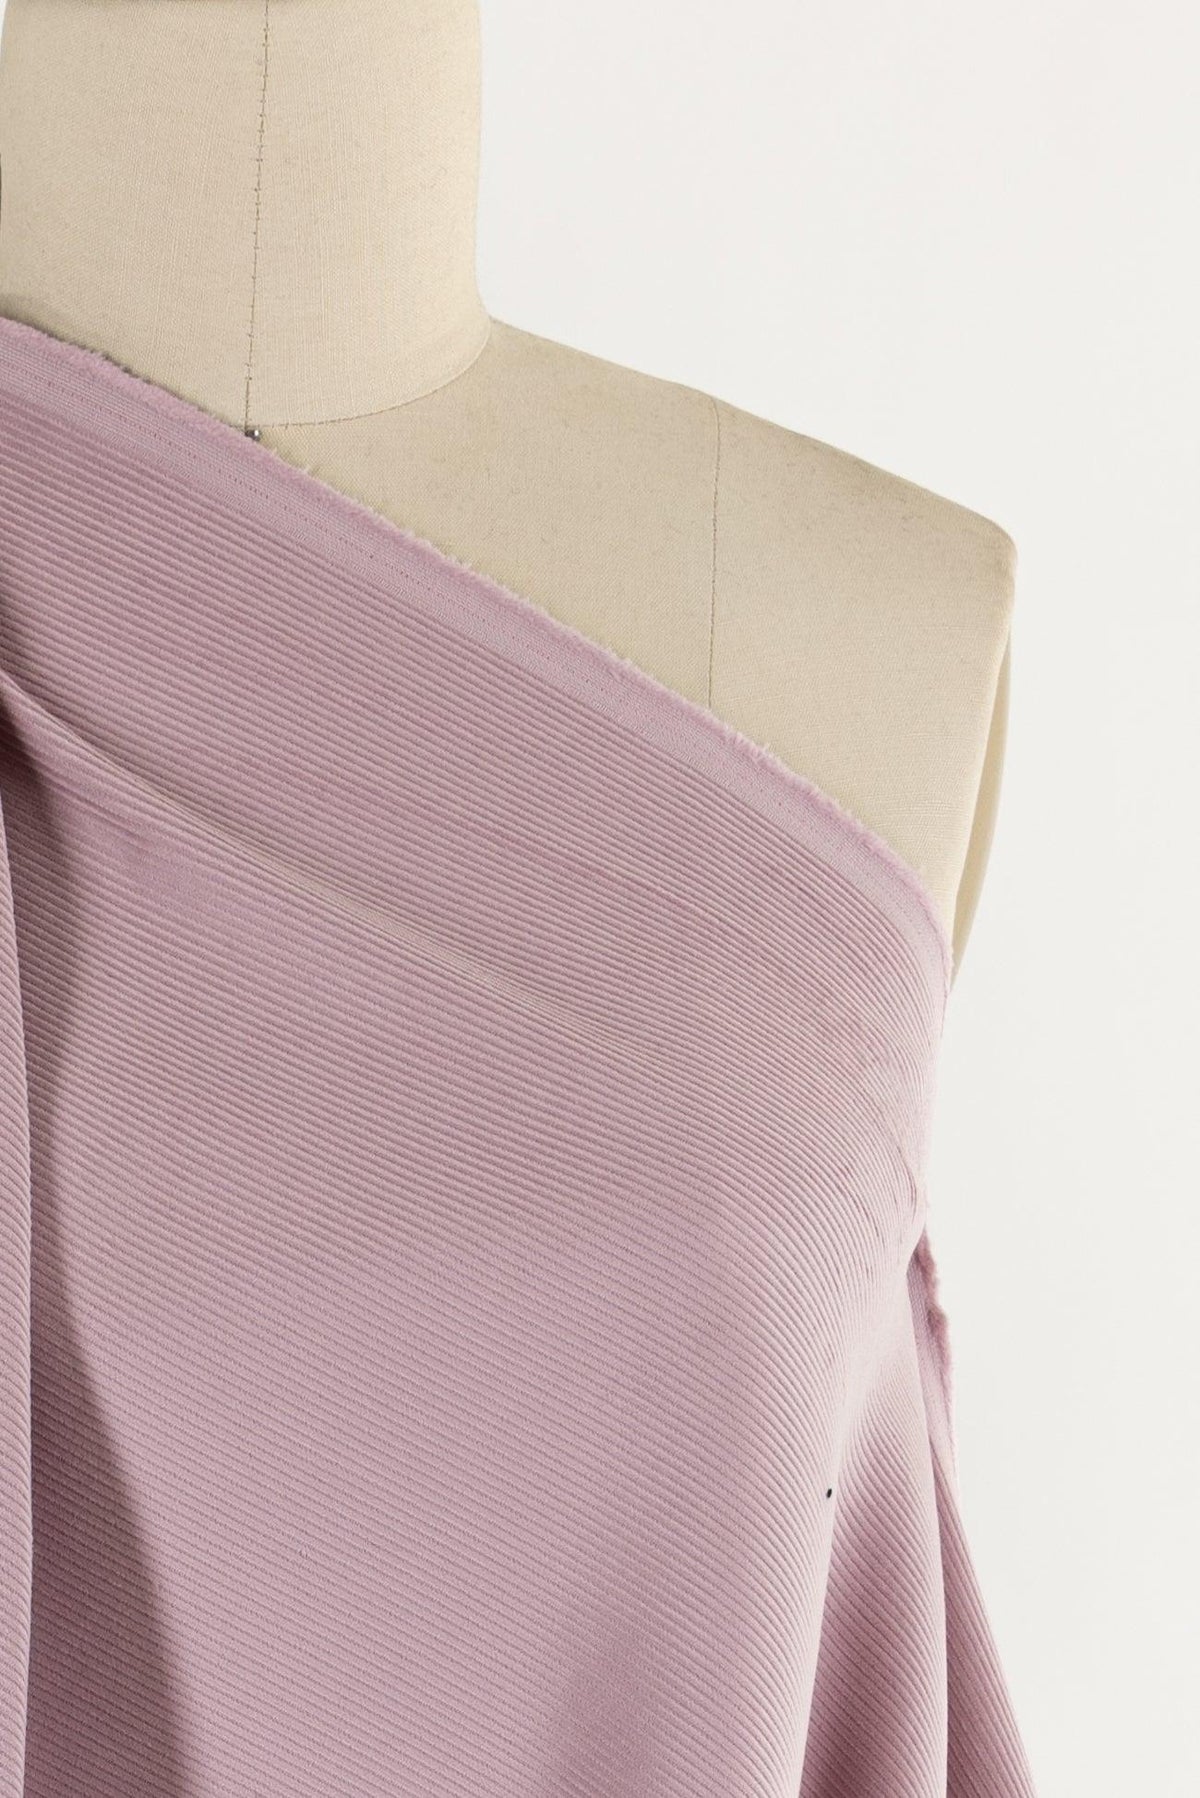 Mauve Pink Cotton Corduroy Woven - Marcy Tilton Fabrics